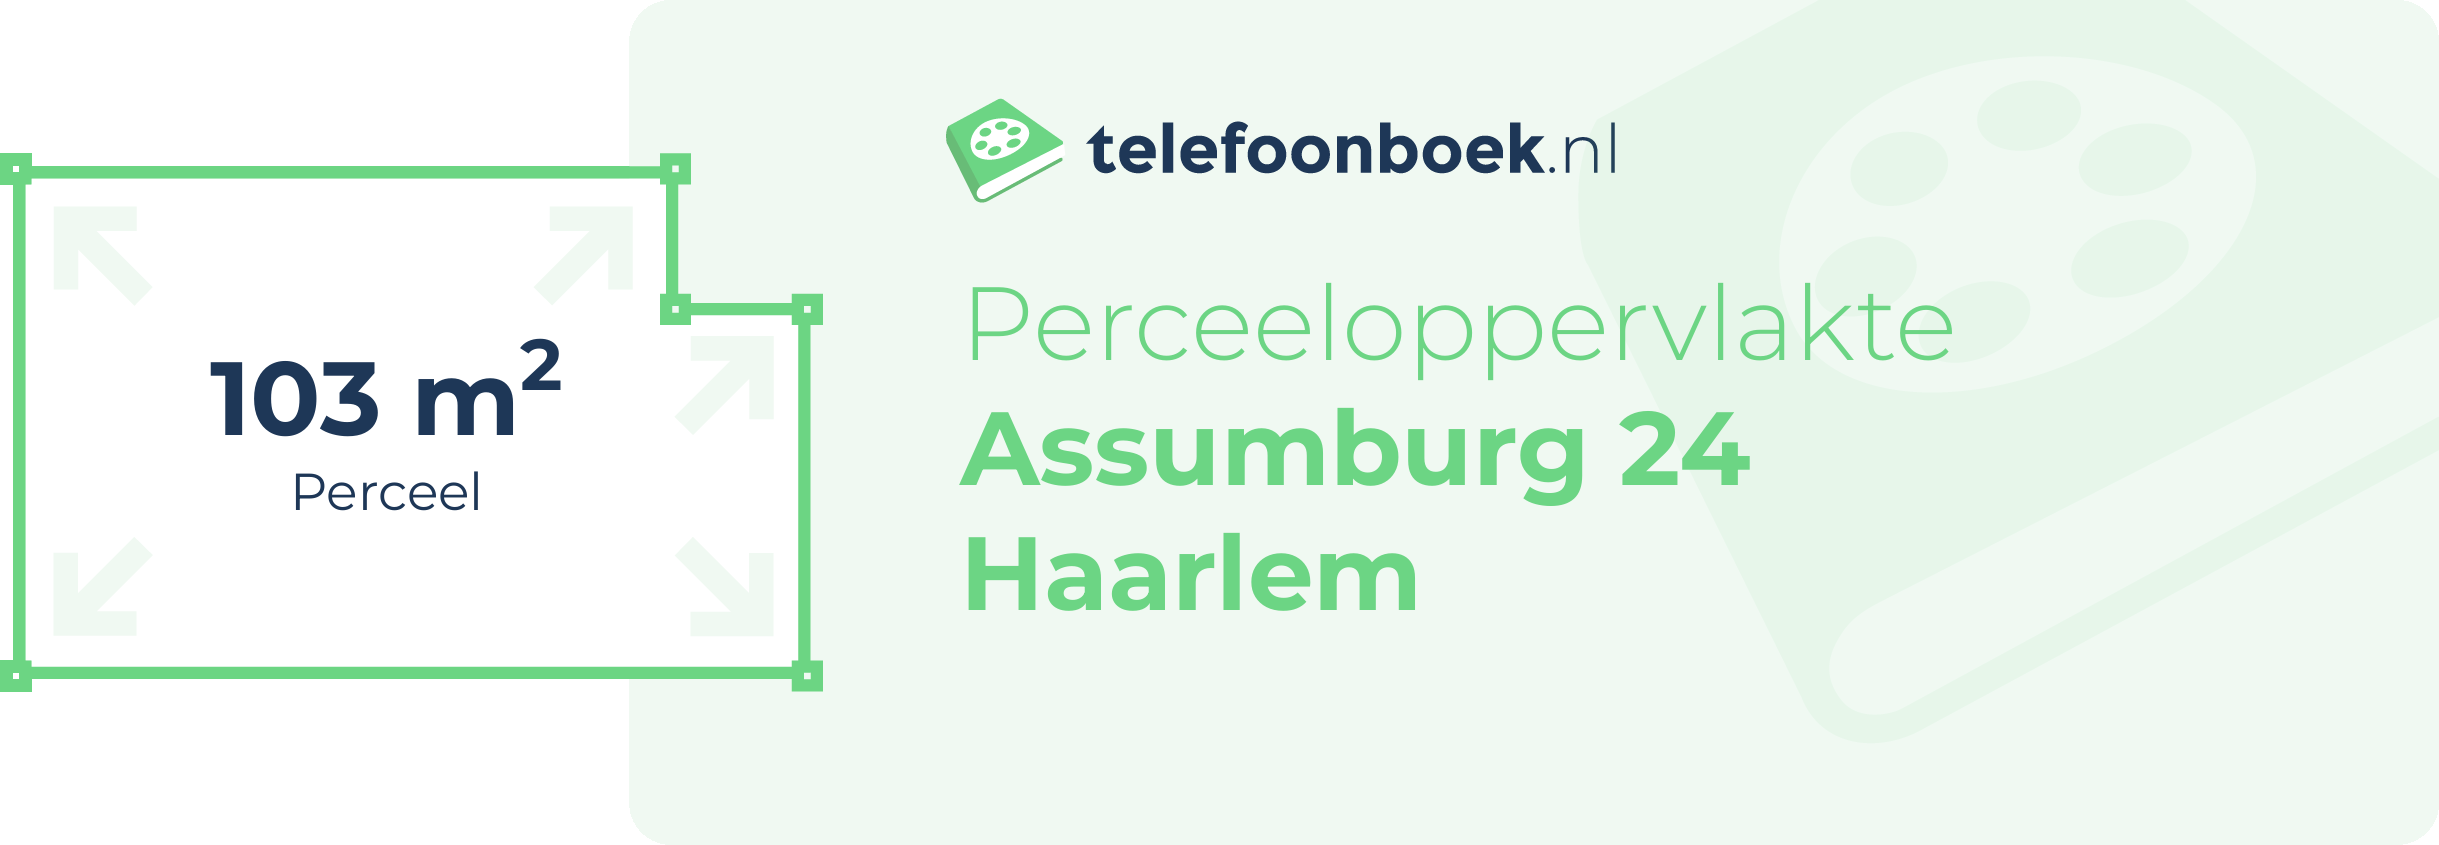 Perceeloppervlakte Assumburg 24 Haarlem